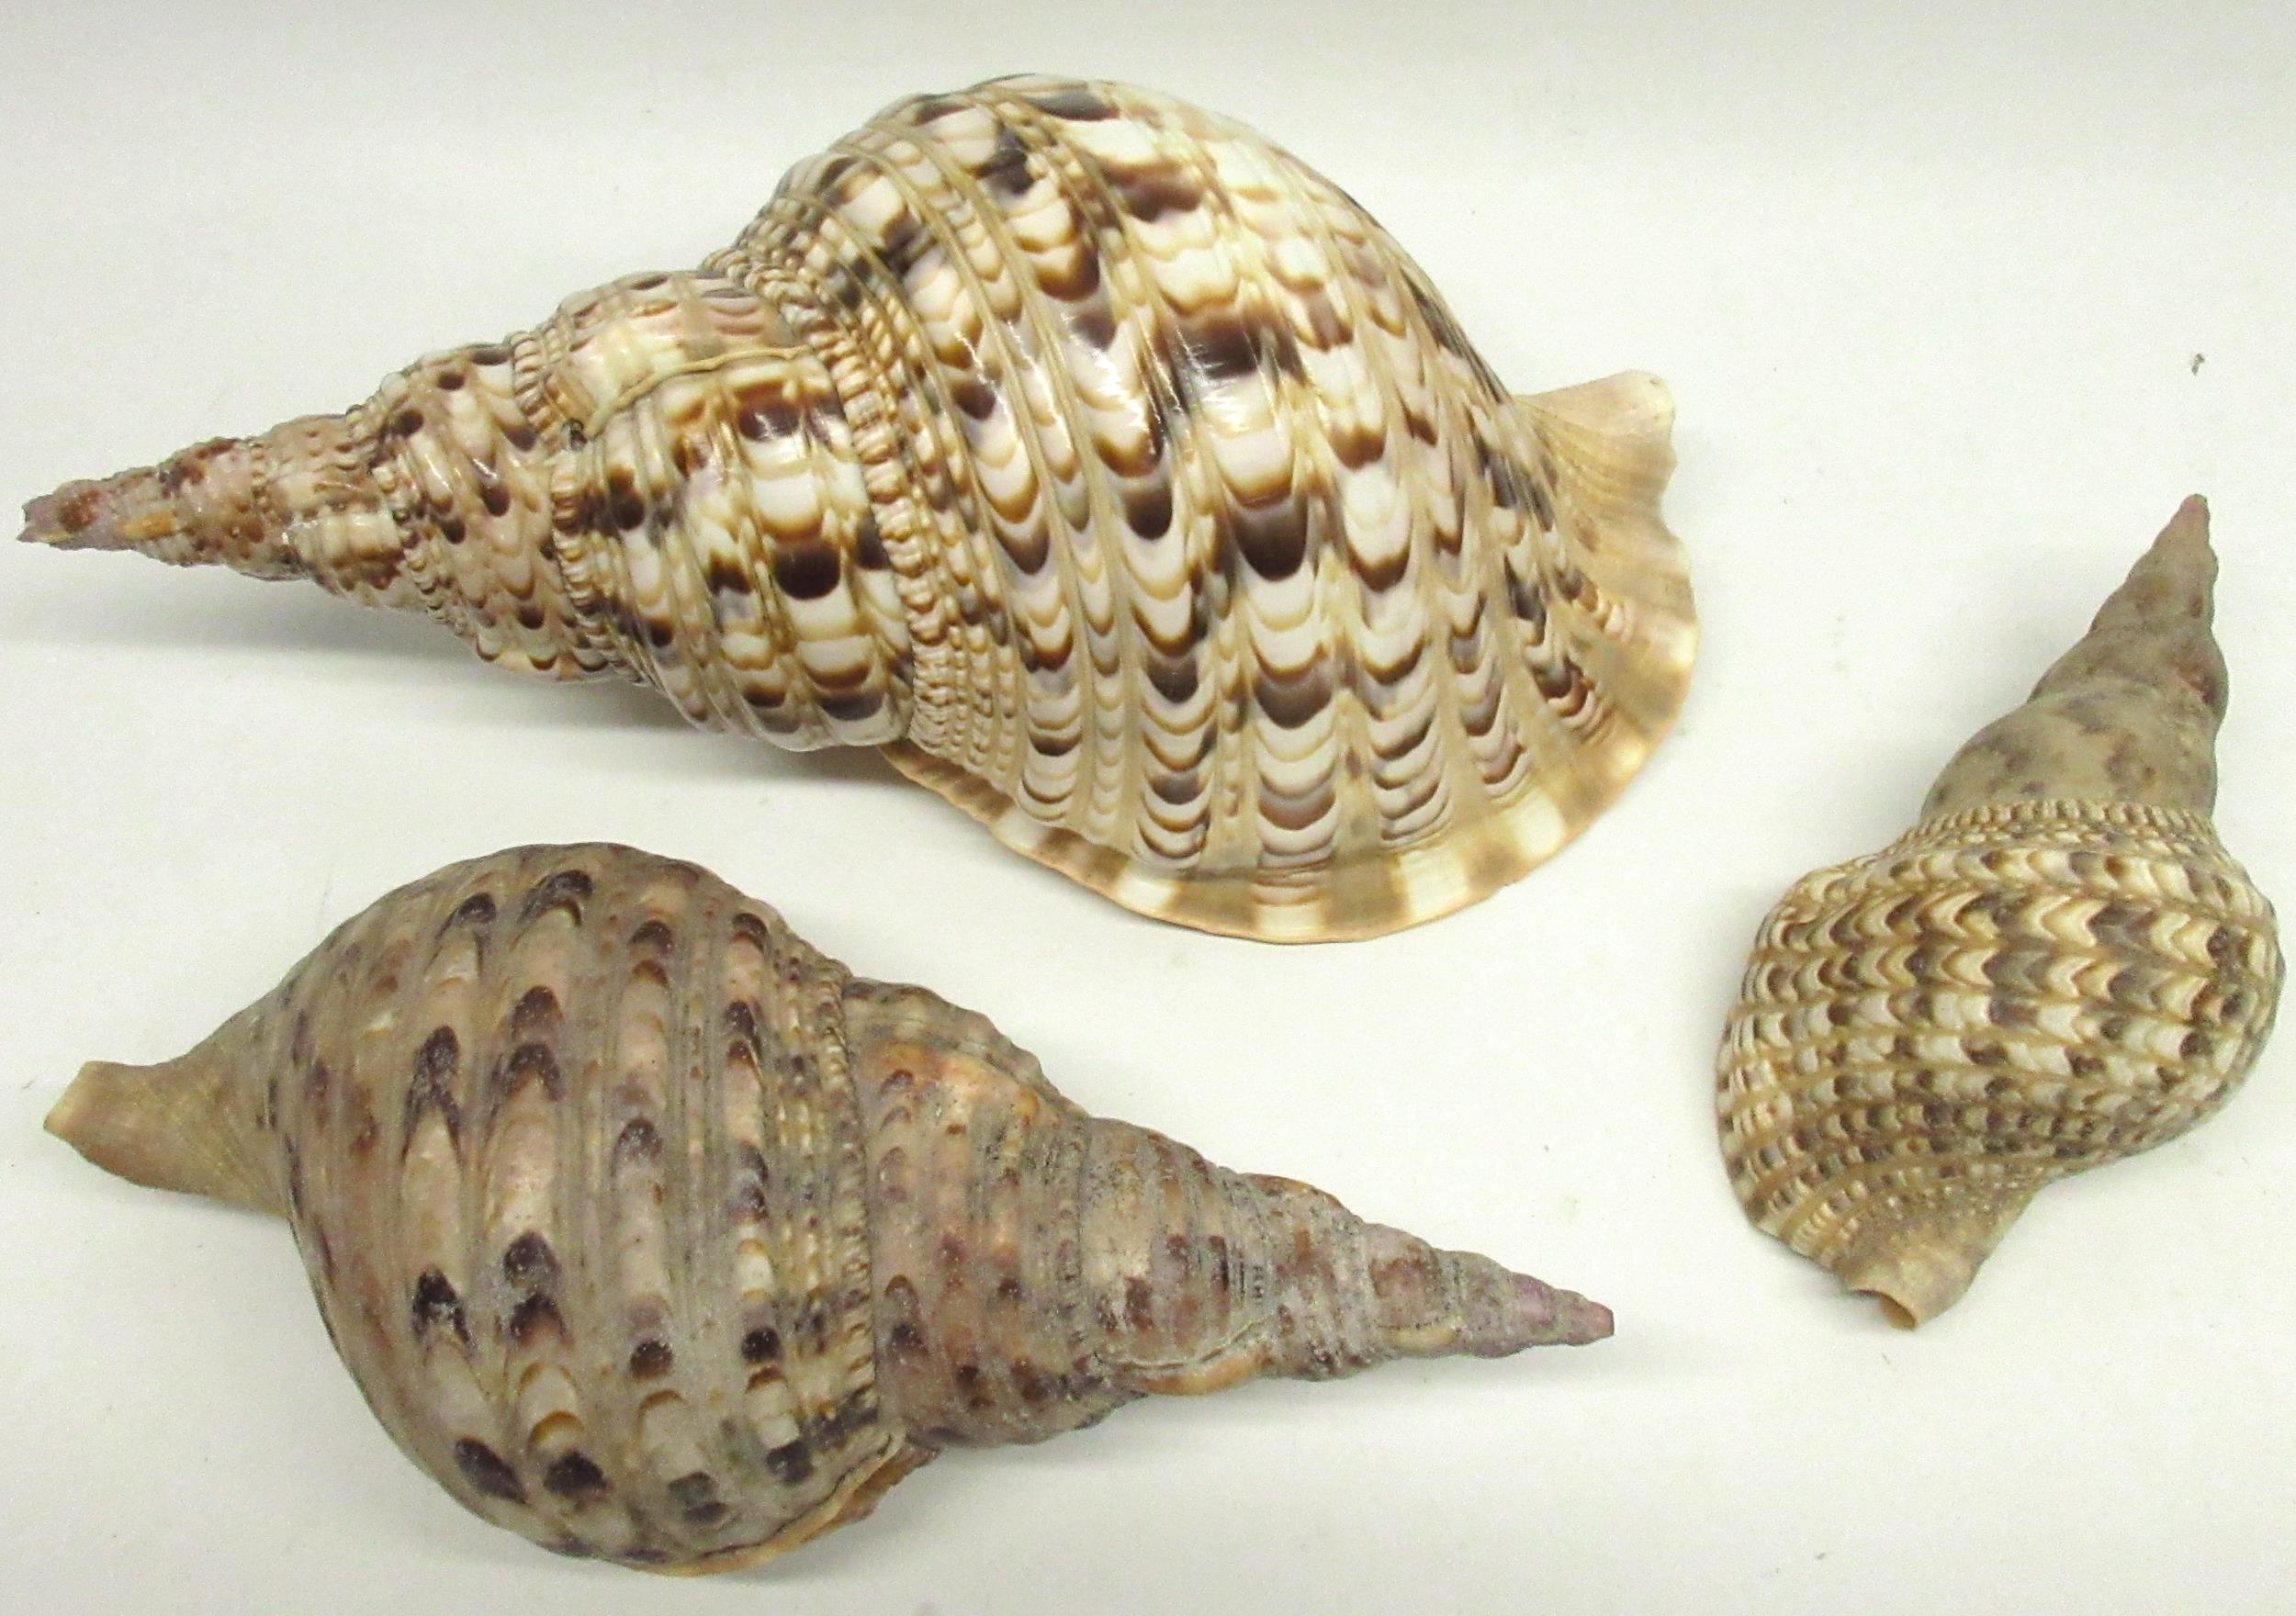 Collection of 3 Triton's trumpet sea shells, (Charonia tritonis - Indo-Pacific region) largest